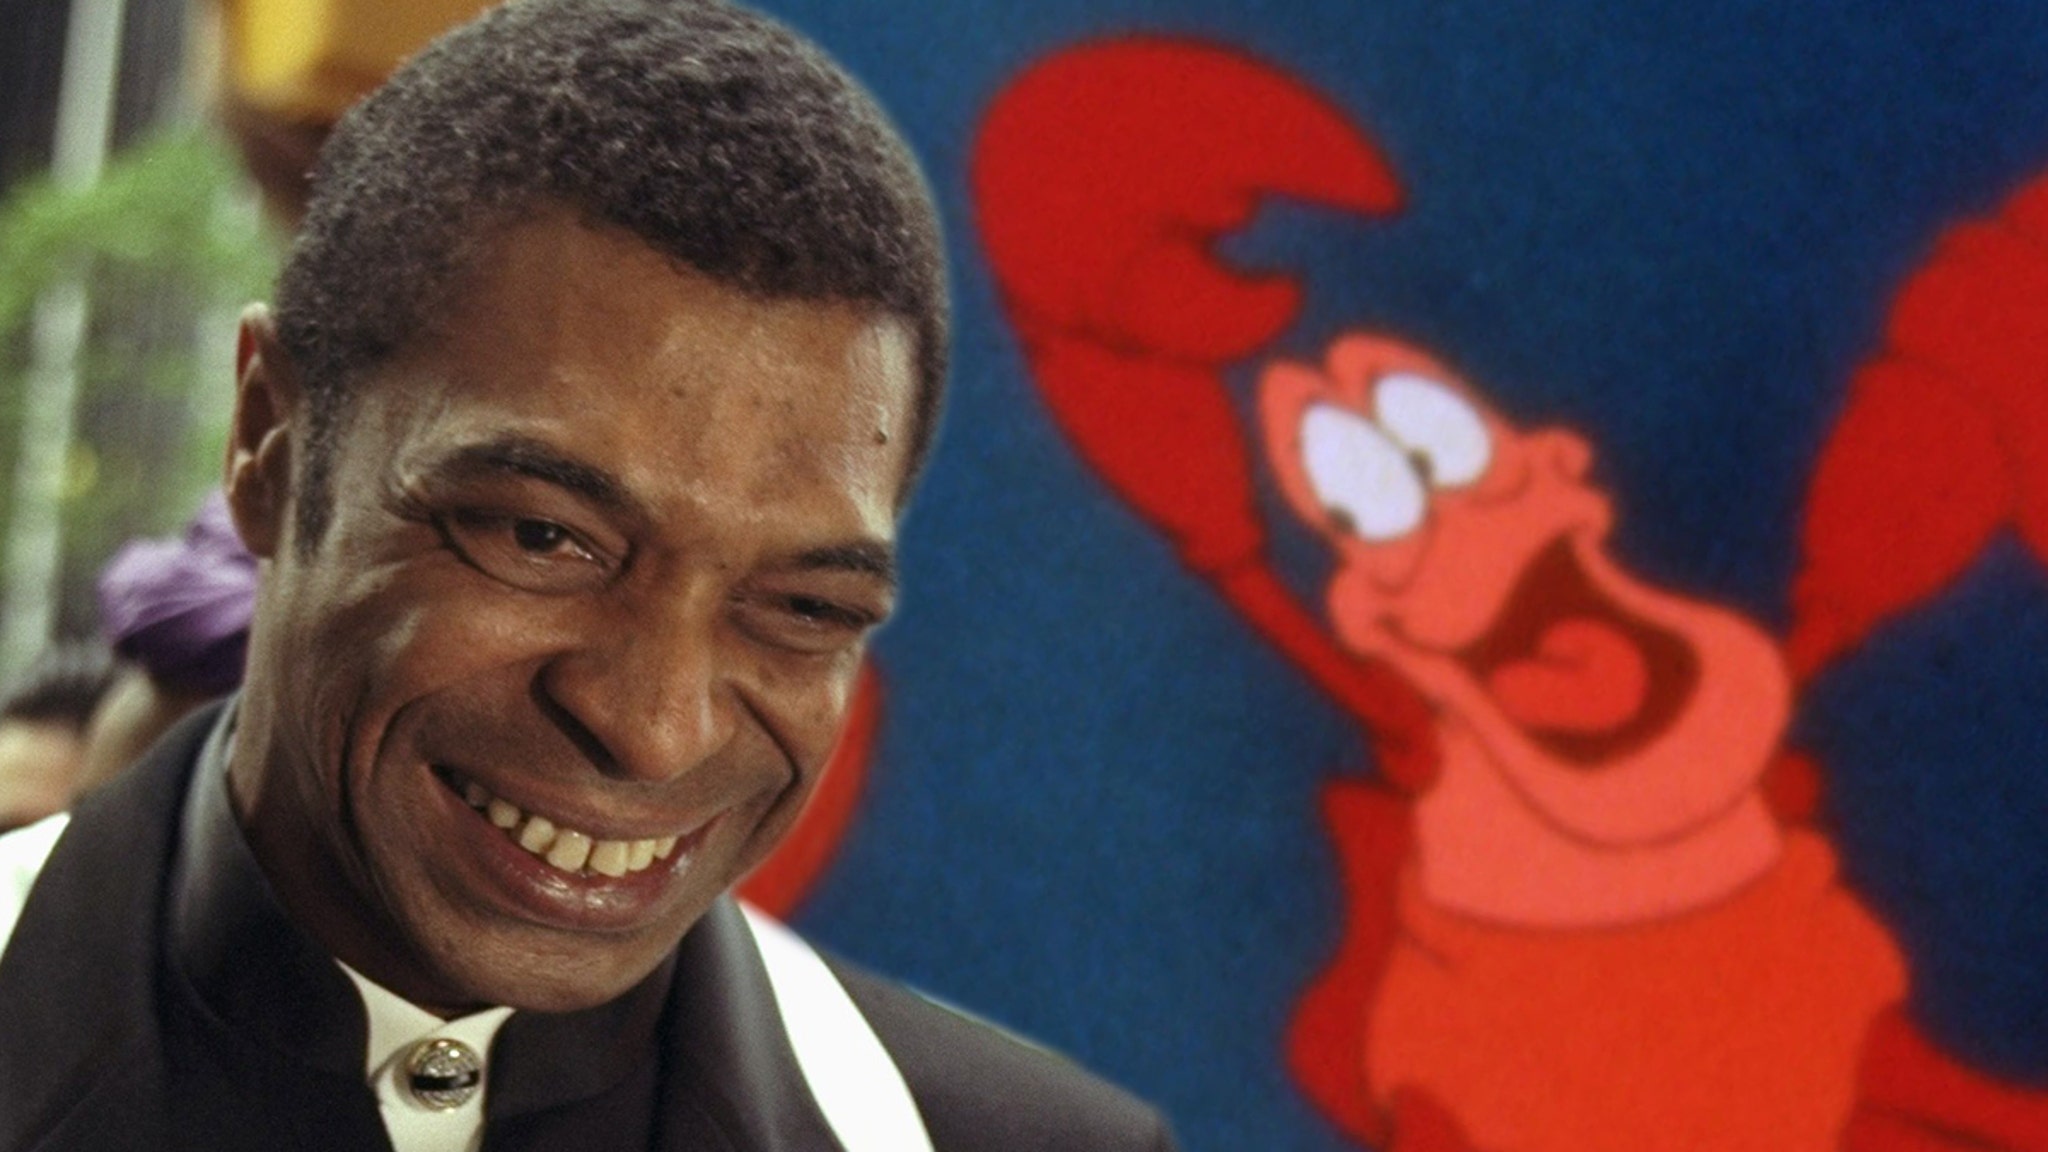 'The Little Mermaid' Sebastian Voice Actor, Samuel E. Wright, Dead at 74